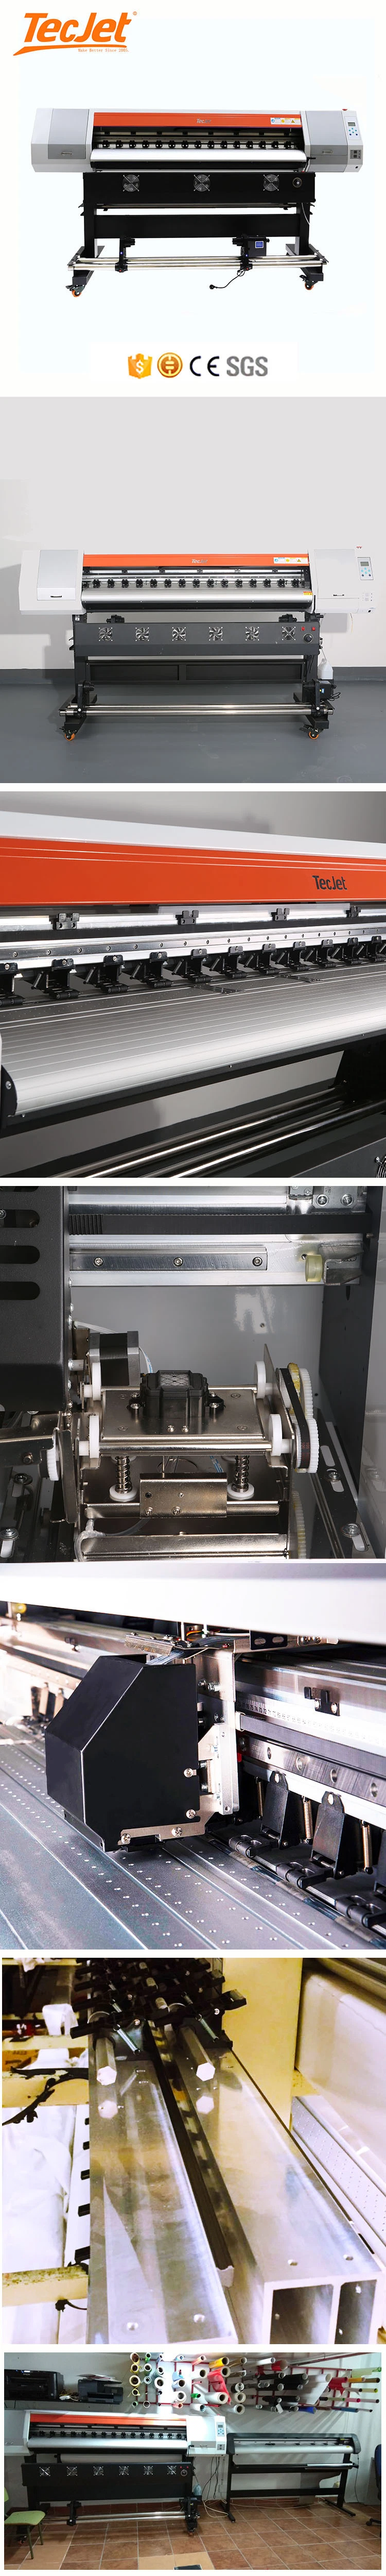 Tecjet Dx5 Dx7 XP600 Printhead Digital Inkjet Eco Solvent Printing Machine Vinyl Sticker Printer